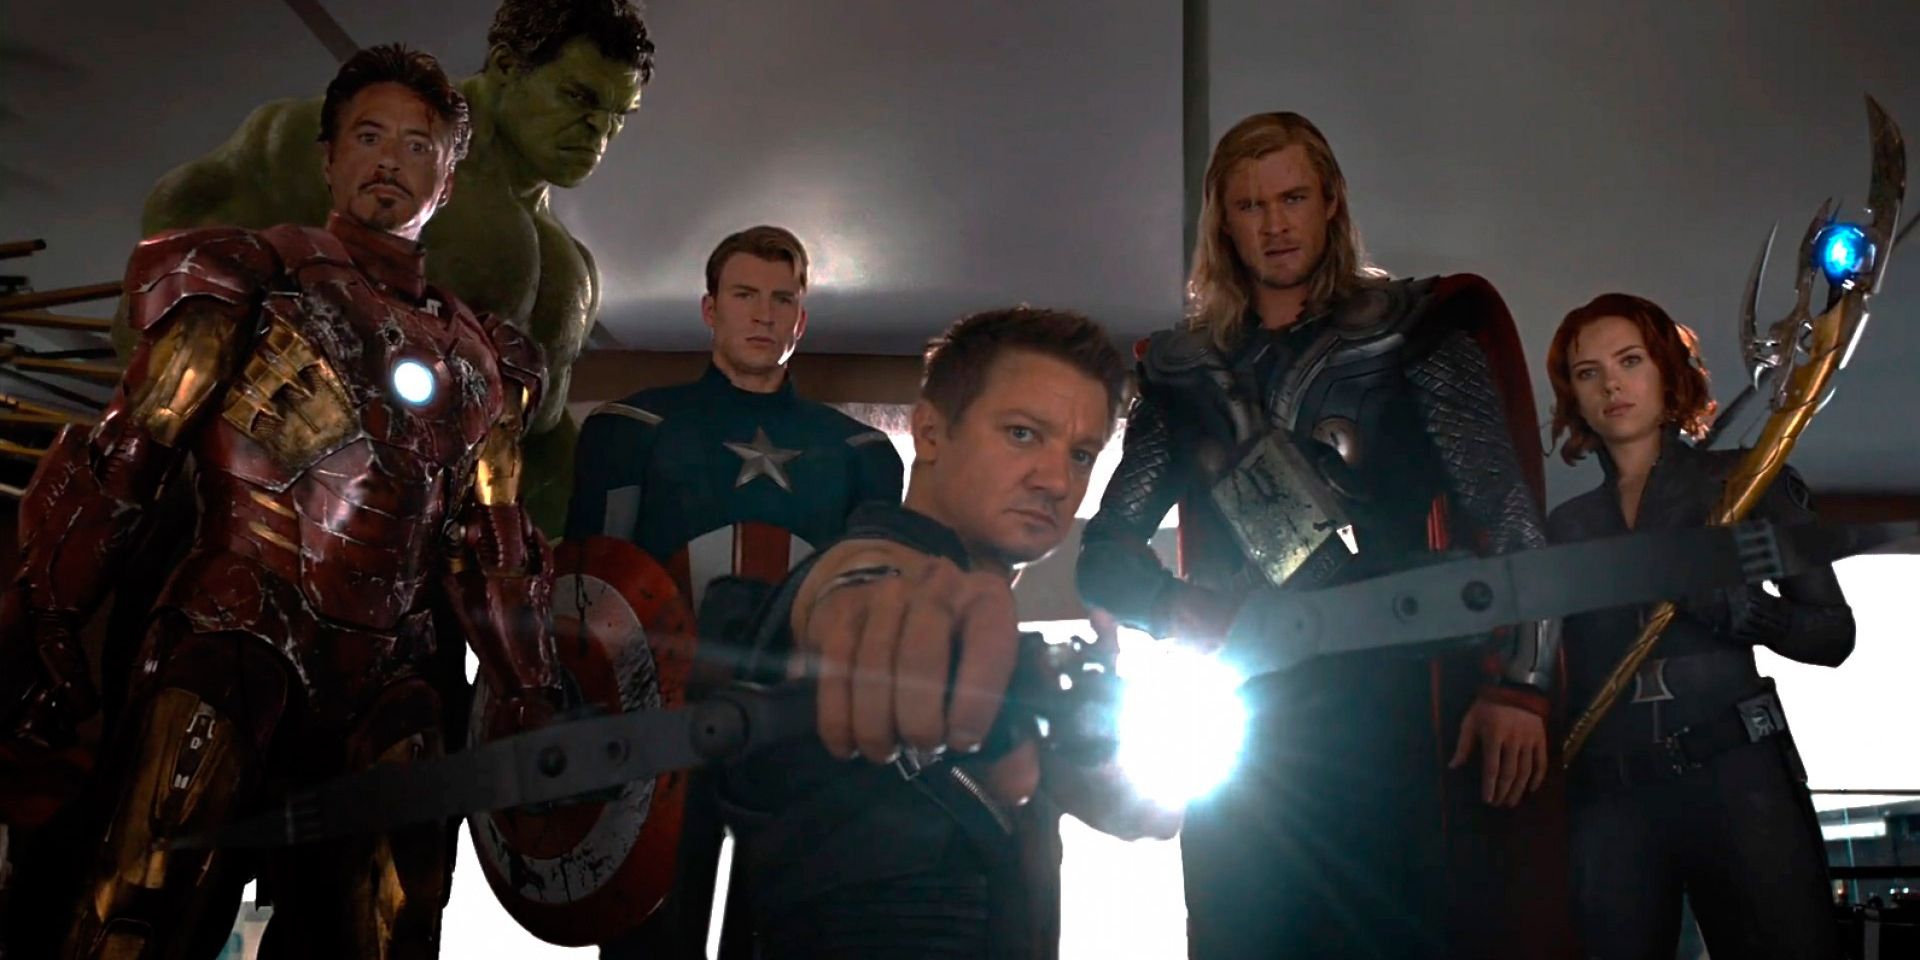 Hawkeye (Jeremy Renner), Thor (Chris Hemsworth), Black Widow (Scarlett Johanssen), Iron Man (Robert Downey Jr.), Hulk (Mark Ruffalo), and Captain America (Chris Evans) stand ready to arrest Loki (Tom Hiddleston)